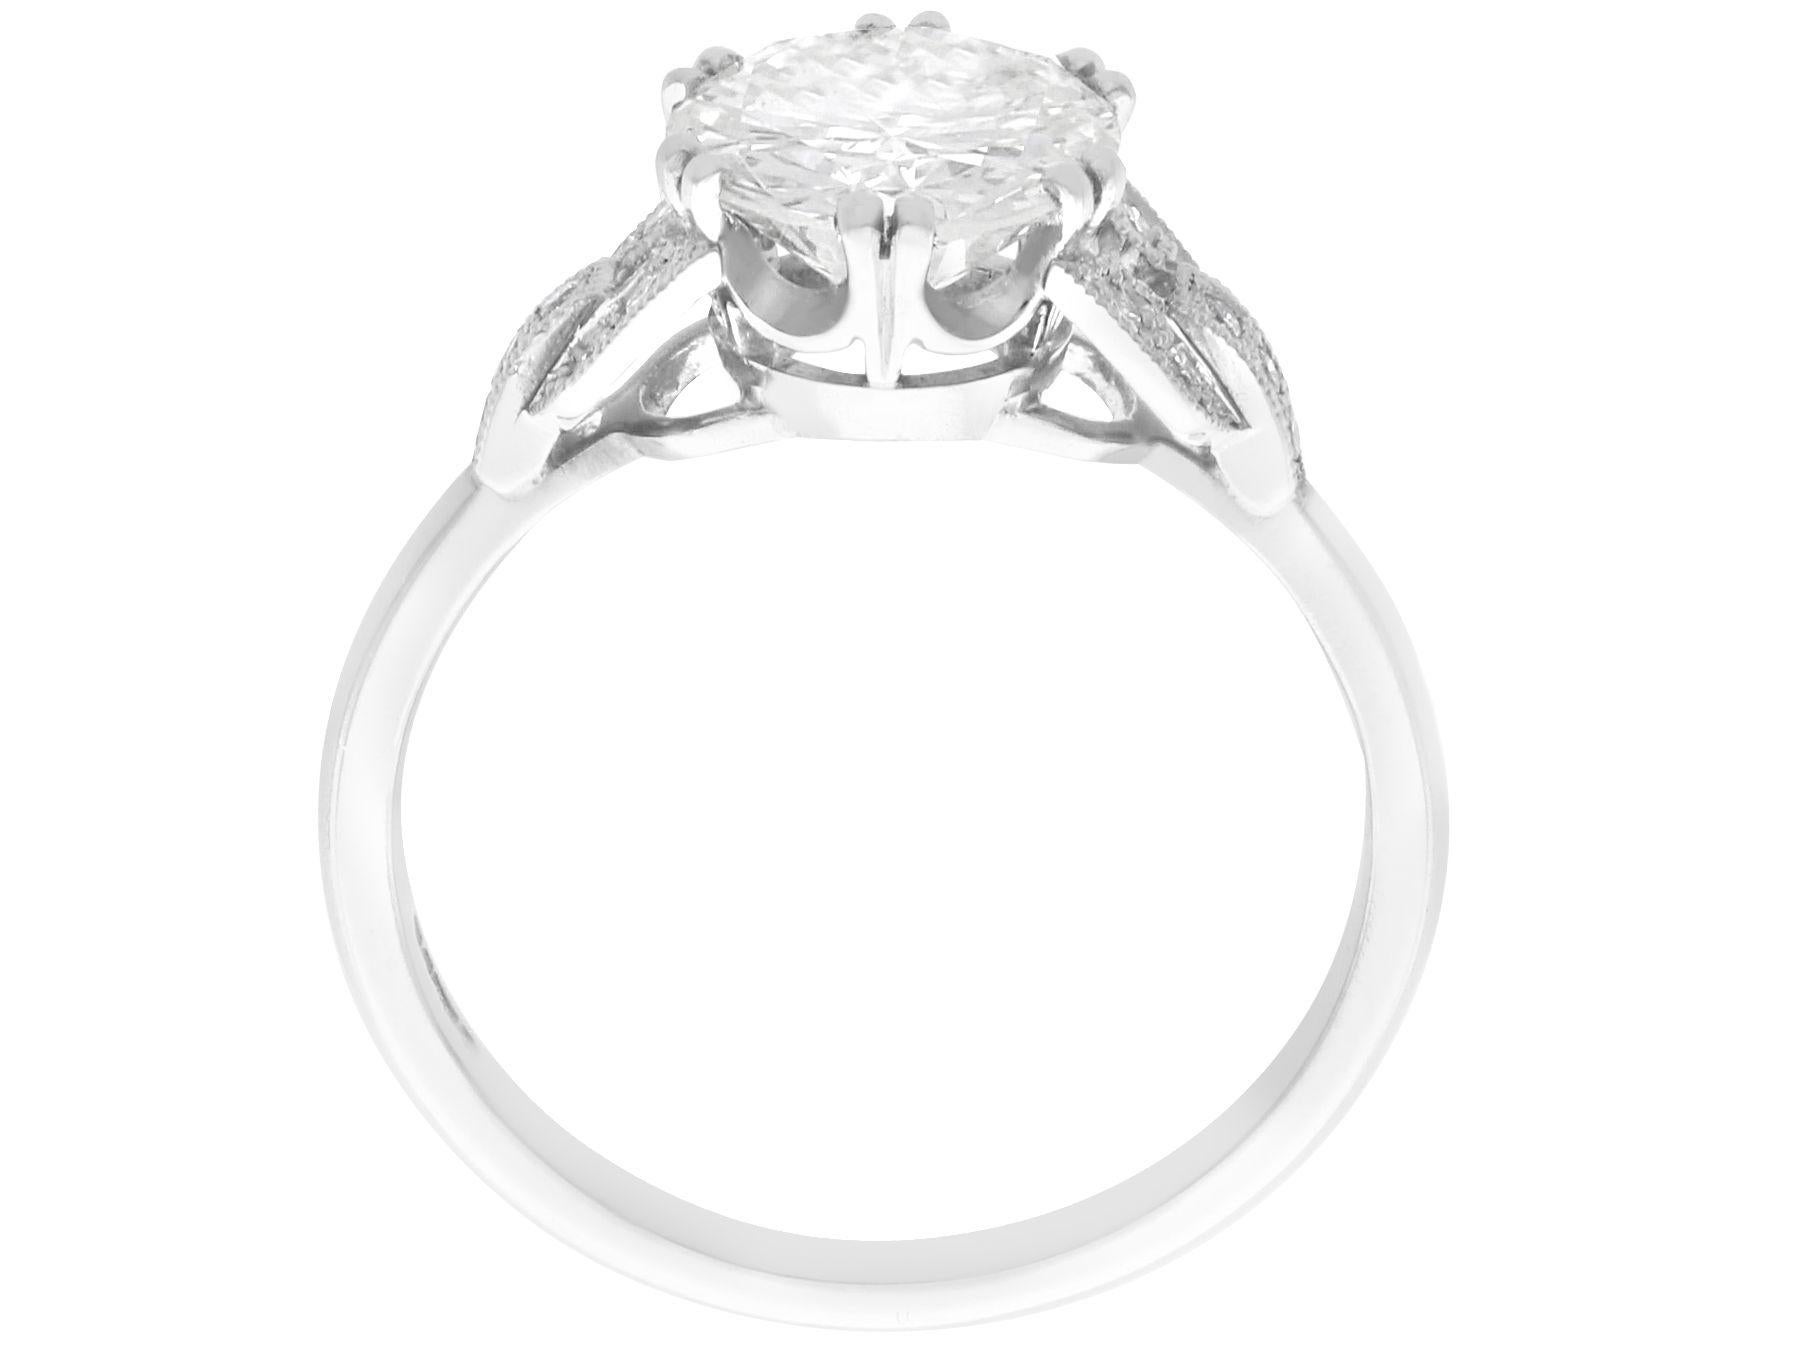 Contemporary 1.86 Carat Diamond Solitaire Engagement Ring in Platinum For Sale